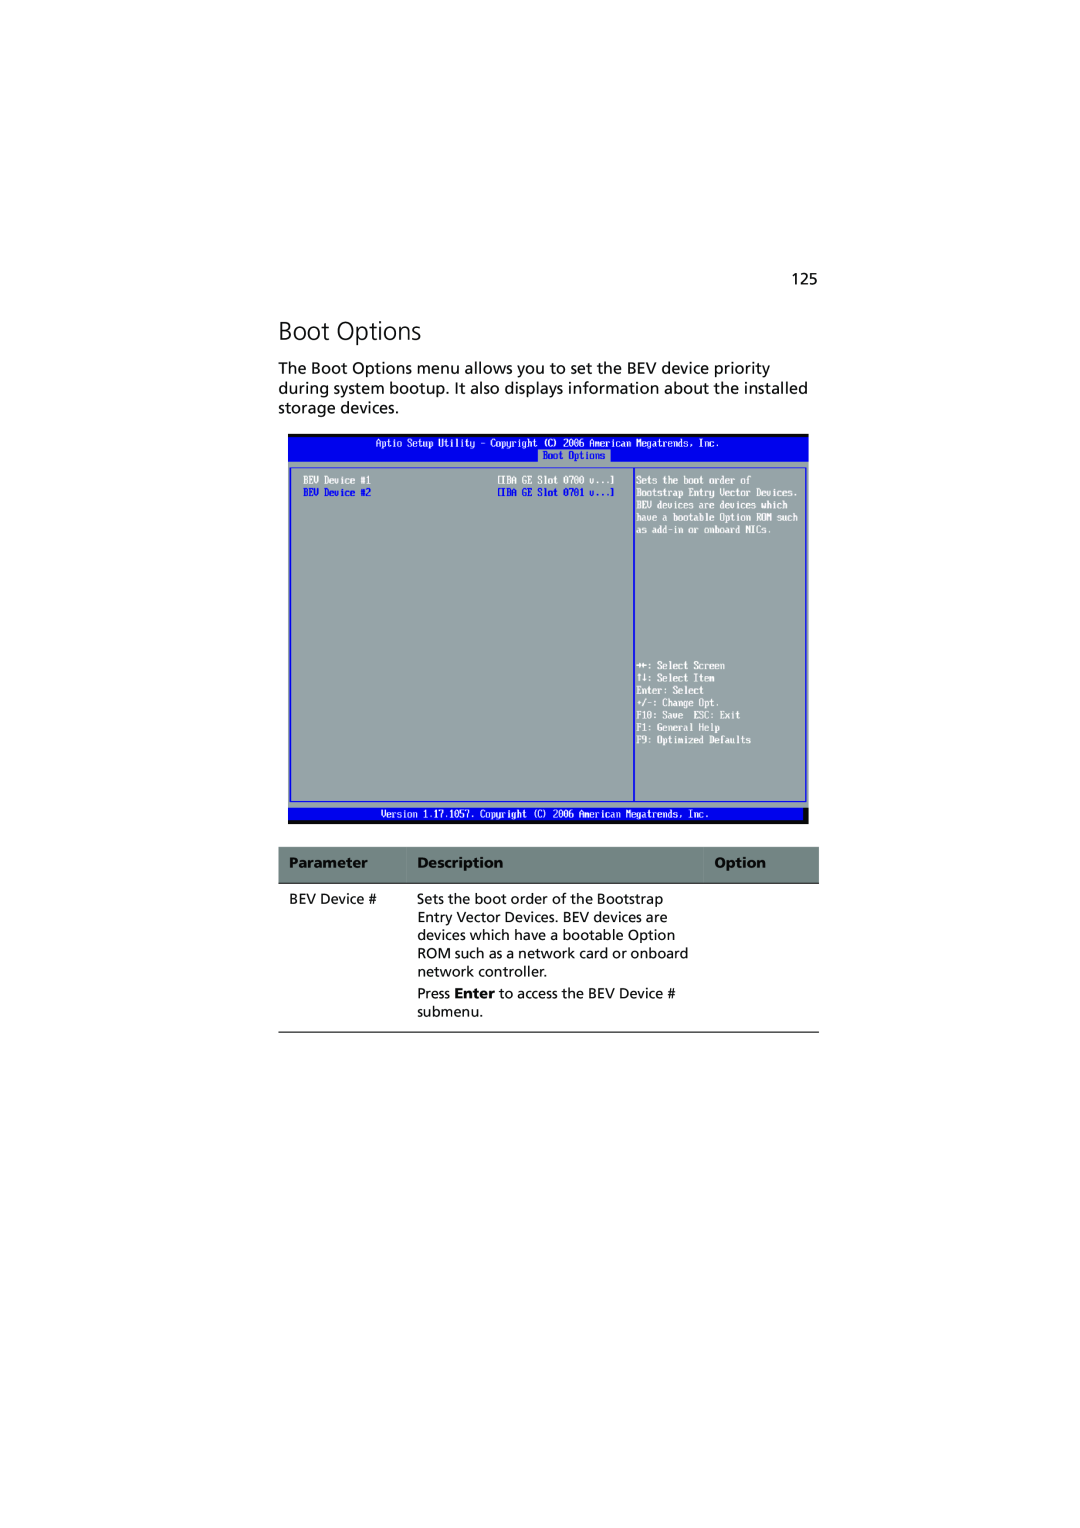 Acer R720 Series manual Boot Options, Parameter, Description 